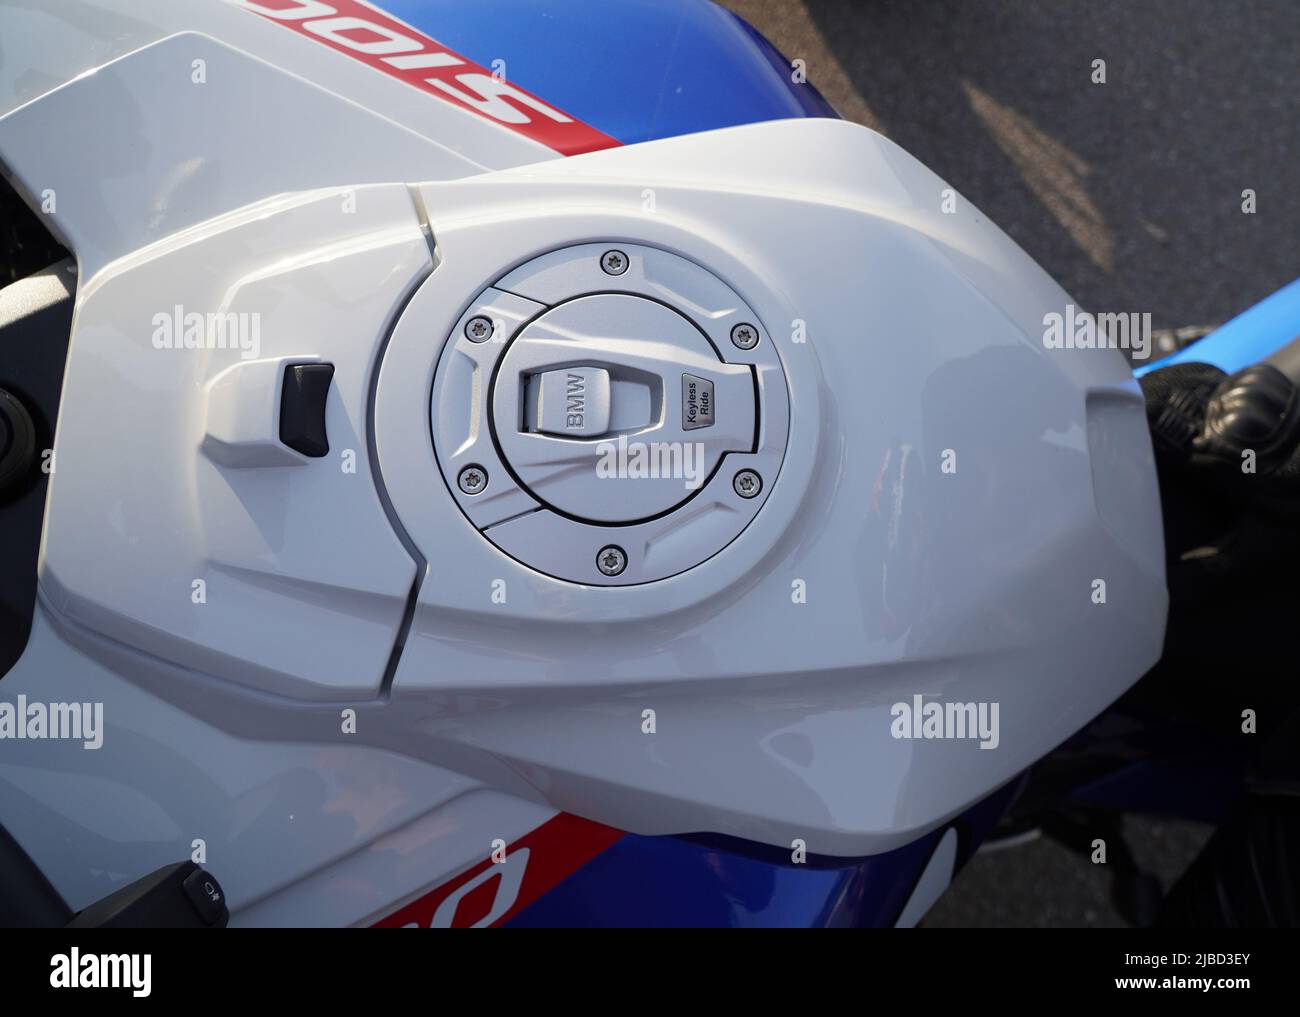 Motor bike fuel tank -Fotos und -Bildmaterial in hoher Auflösung – Alamy